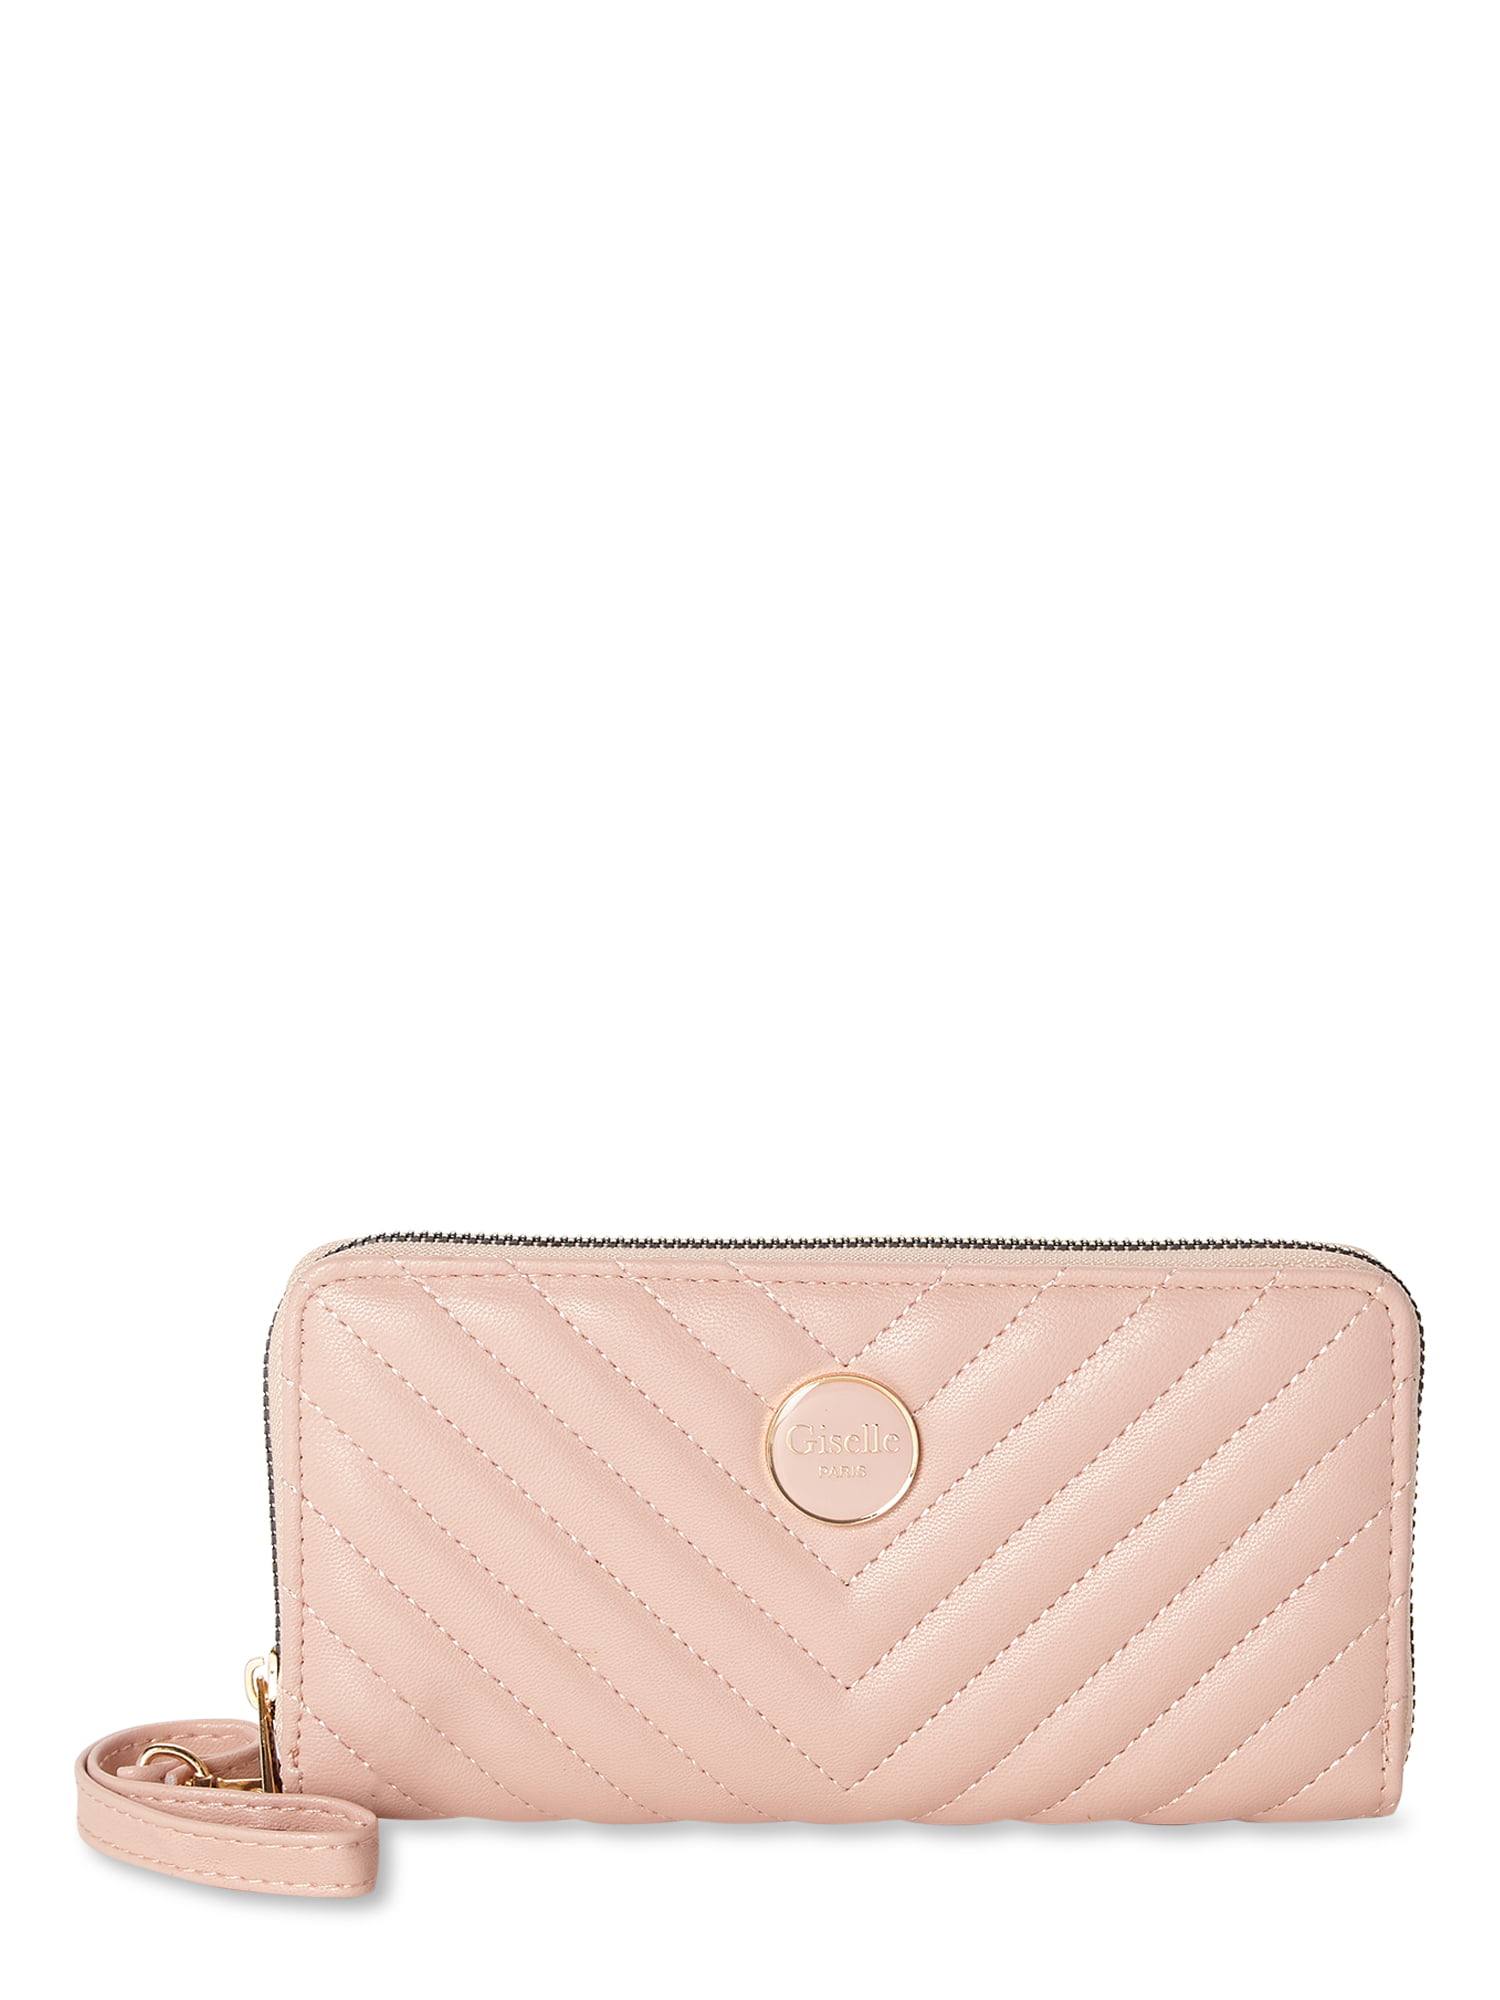 Giselle Zip Around Wristlet Wallet in Gift Box - Walmart.com